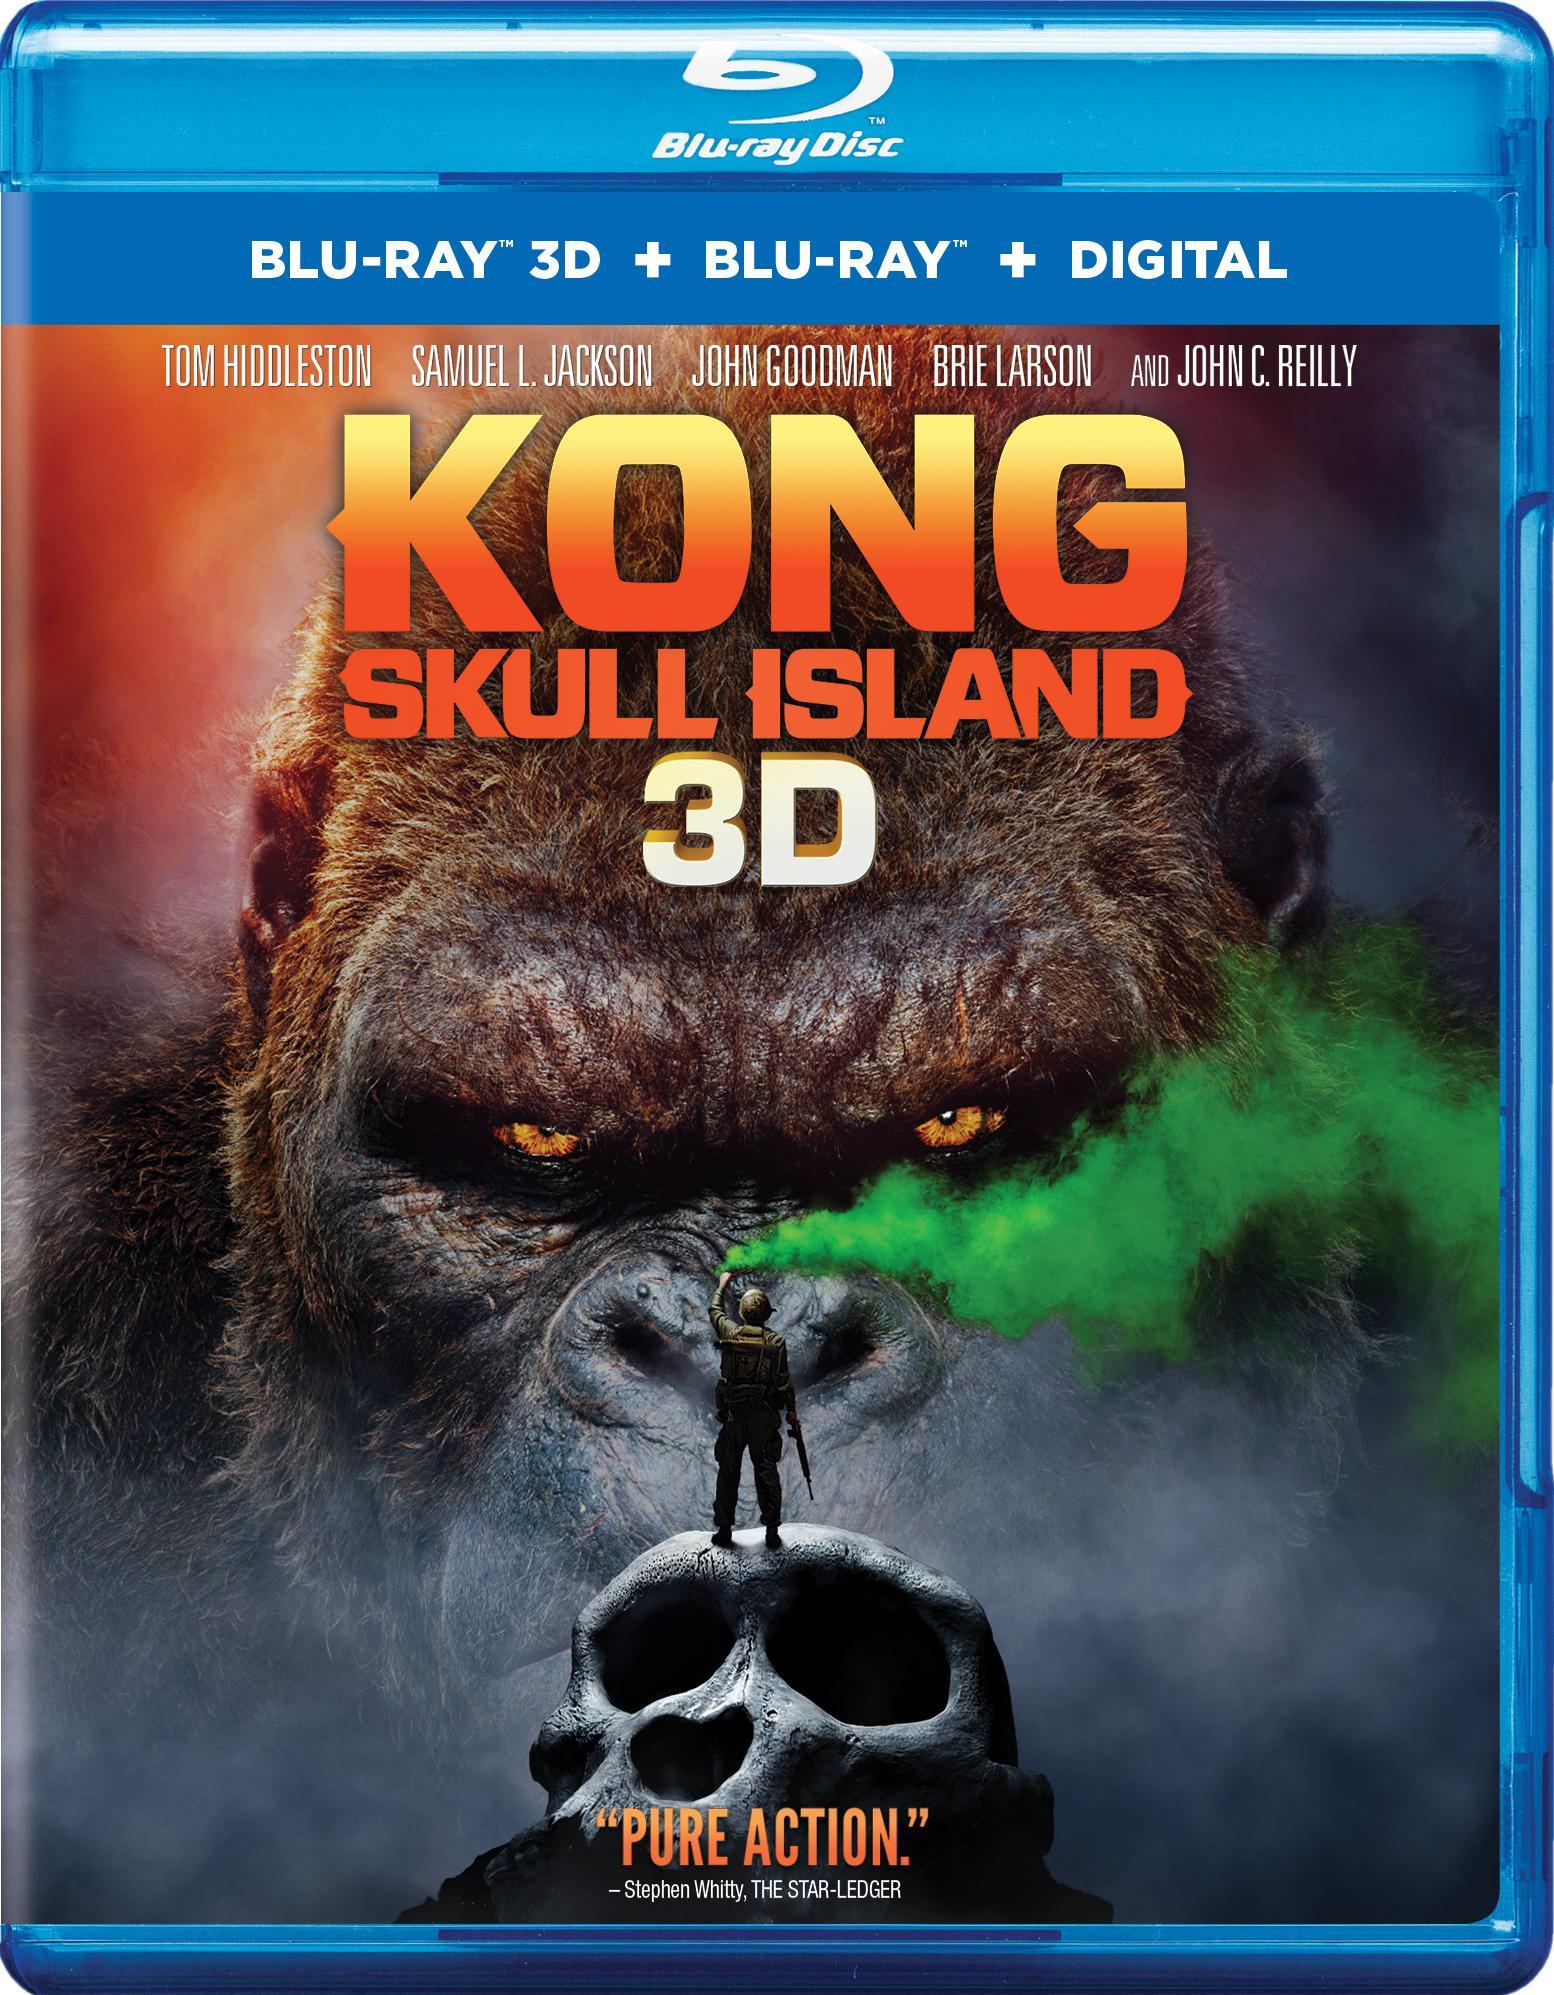 [金刚·骷髅岛].Kong.Skull.Island.2017.HK.3D.BluRay.1080p.AVC.DTS-HD.MA.5.1-TTG   40.14G-1.jpg